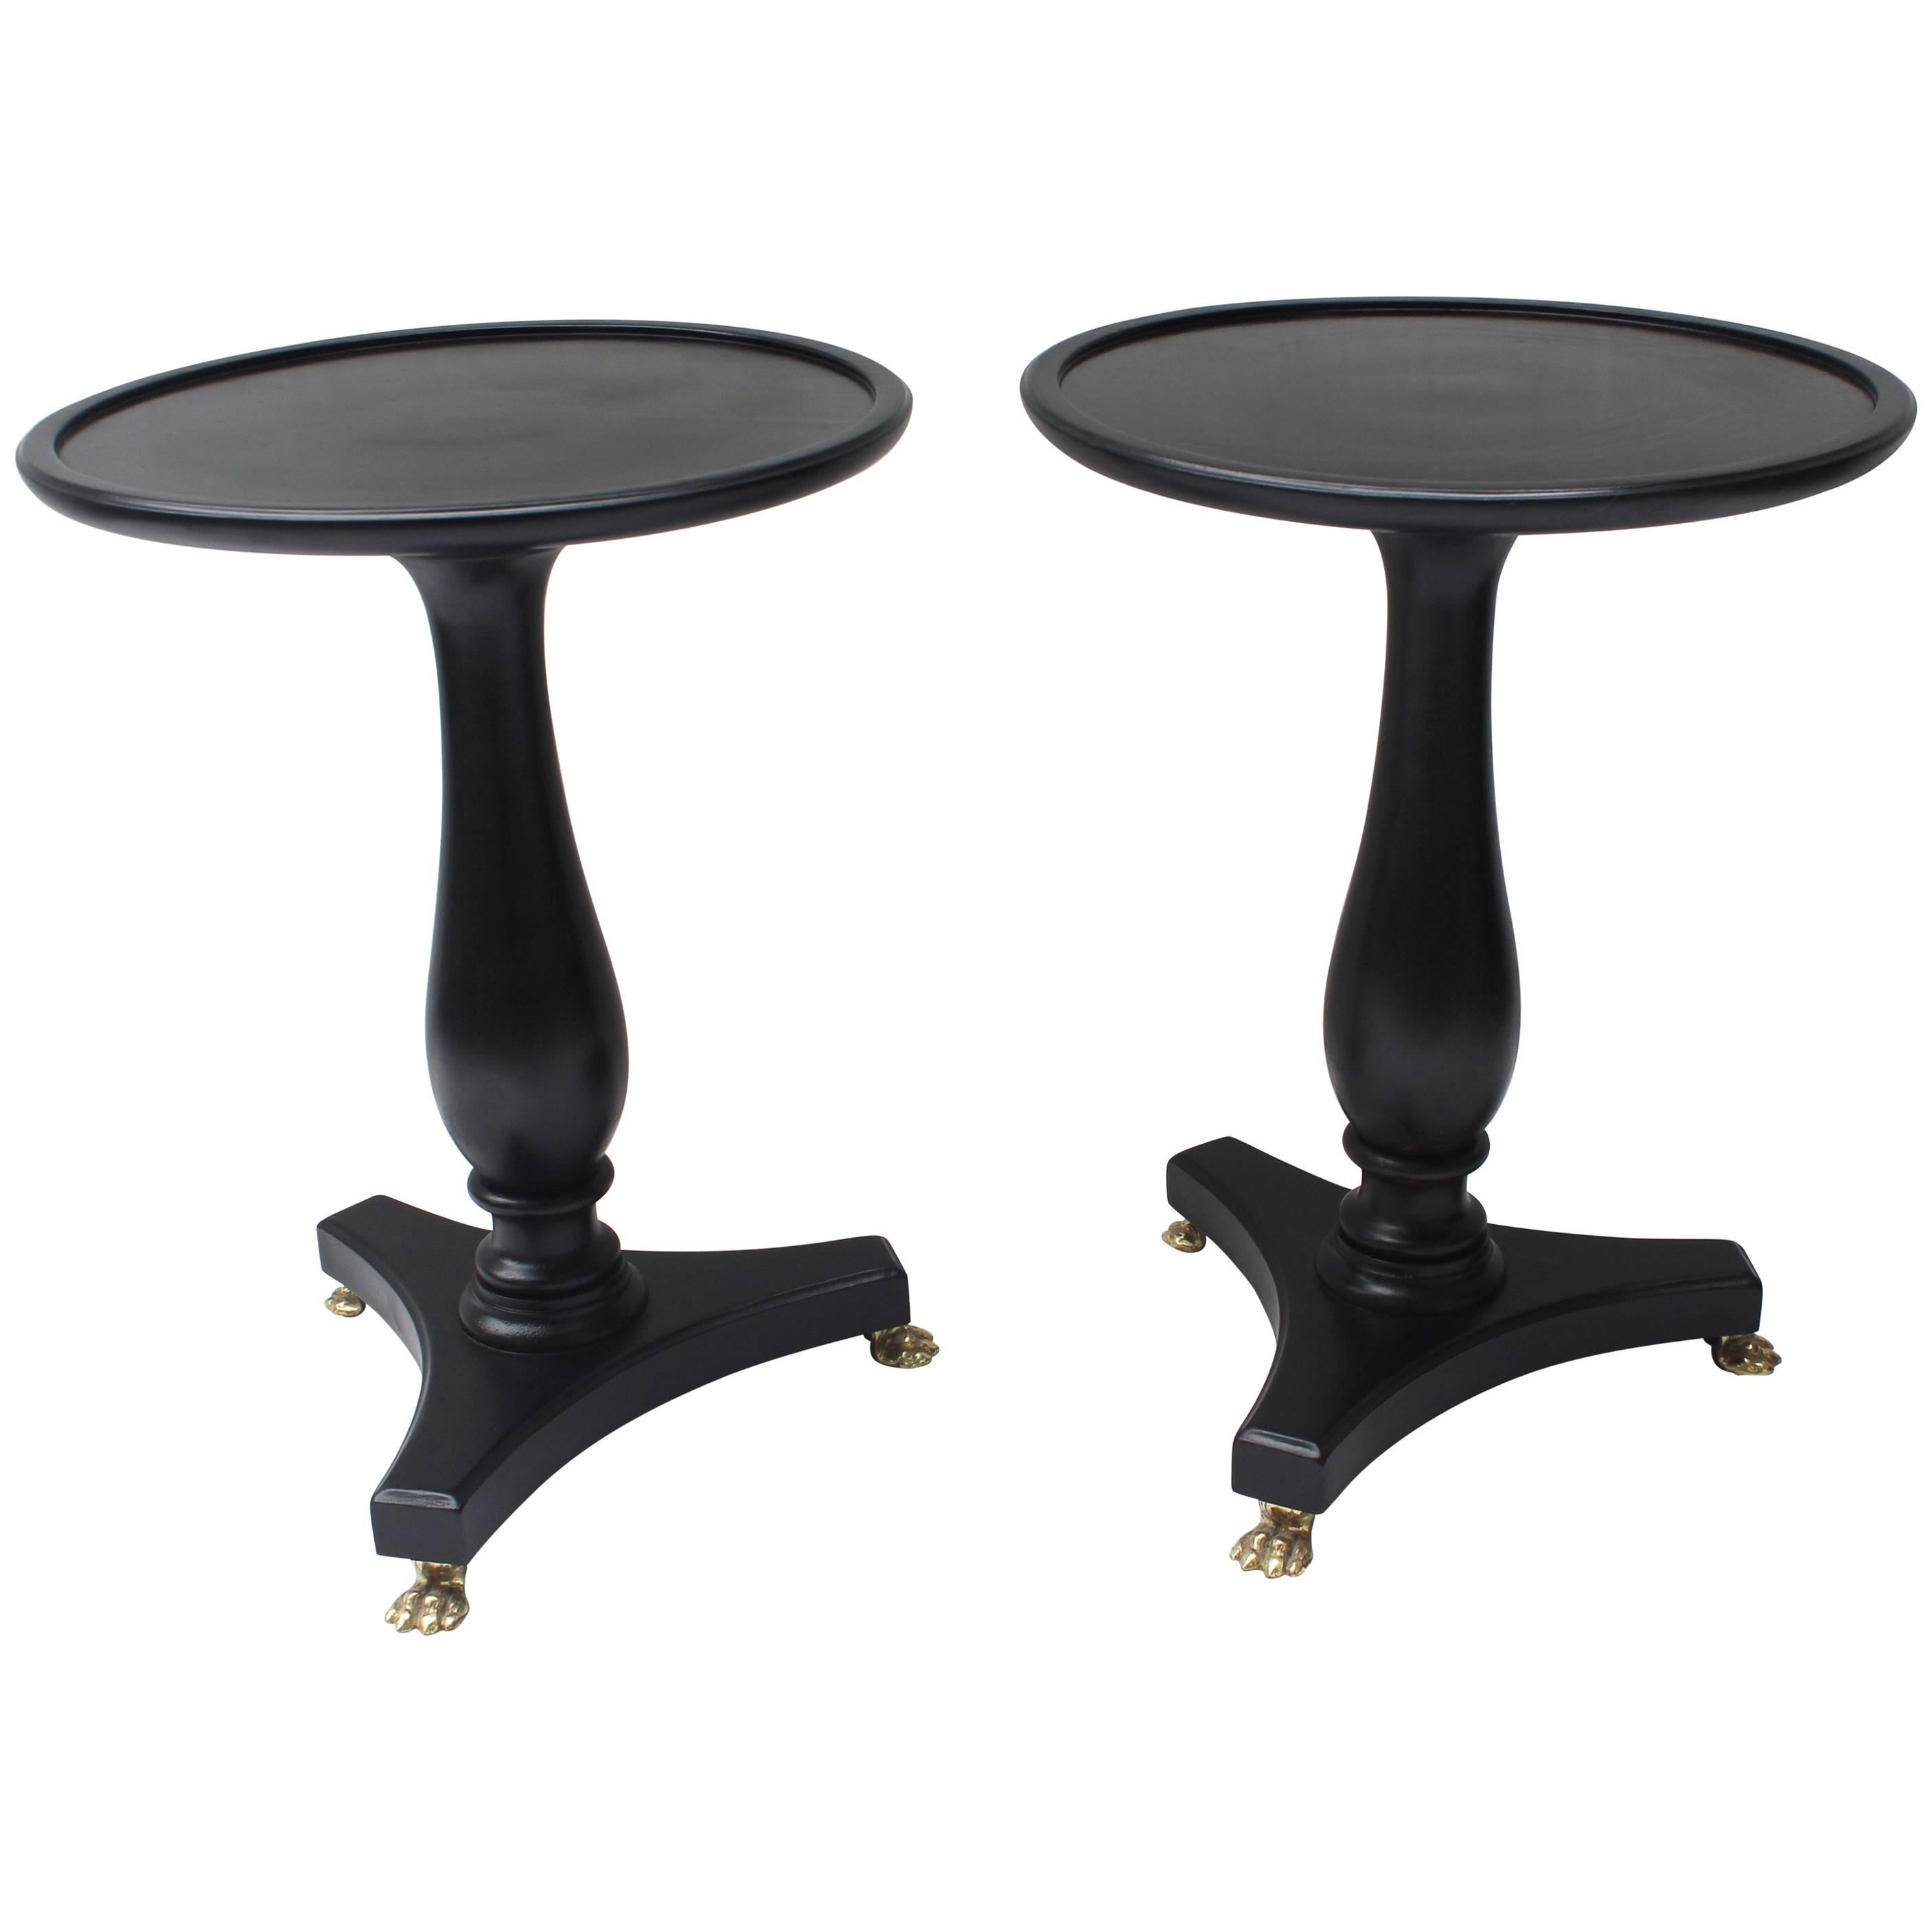 Pair of Pedestal Tables